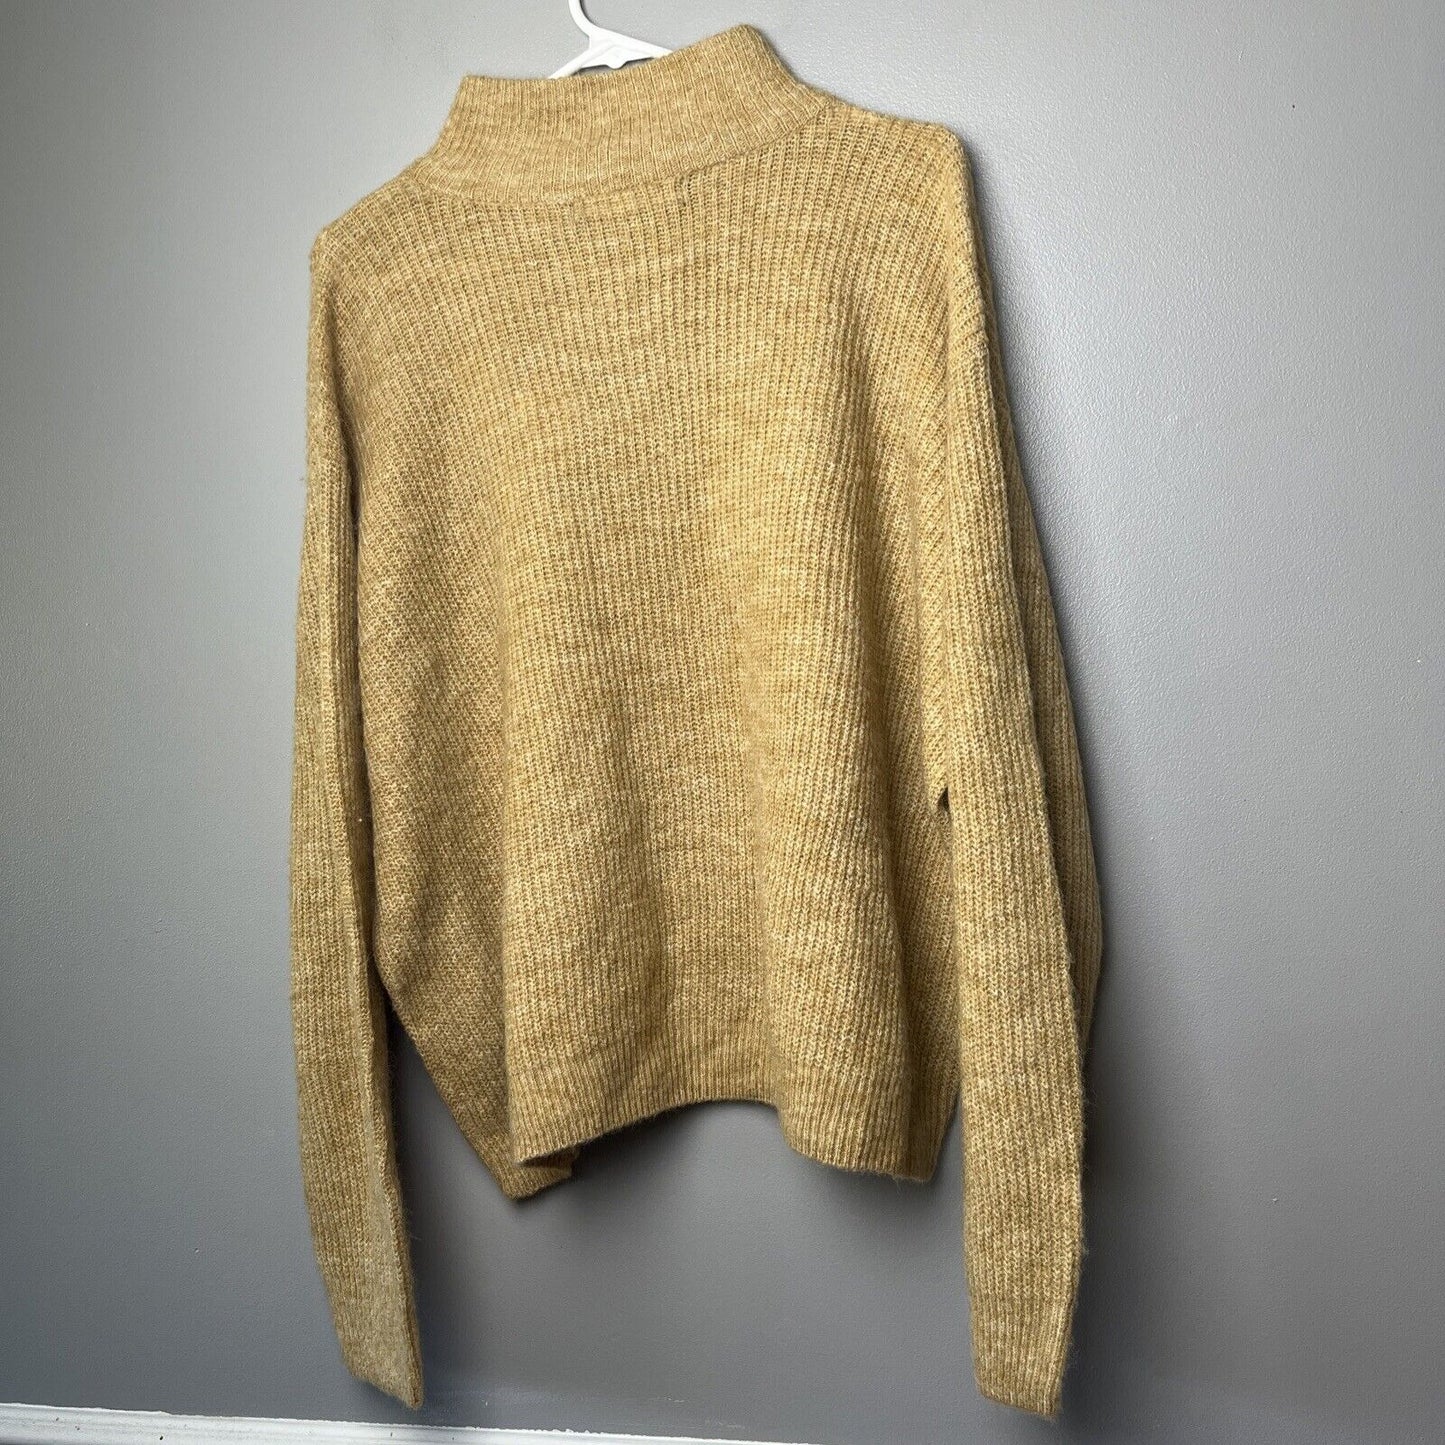 Vero Moda zip funnel neck sweater in camel size XL